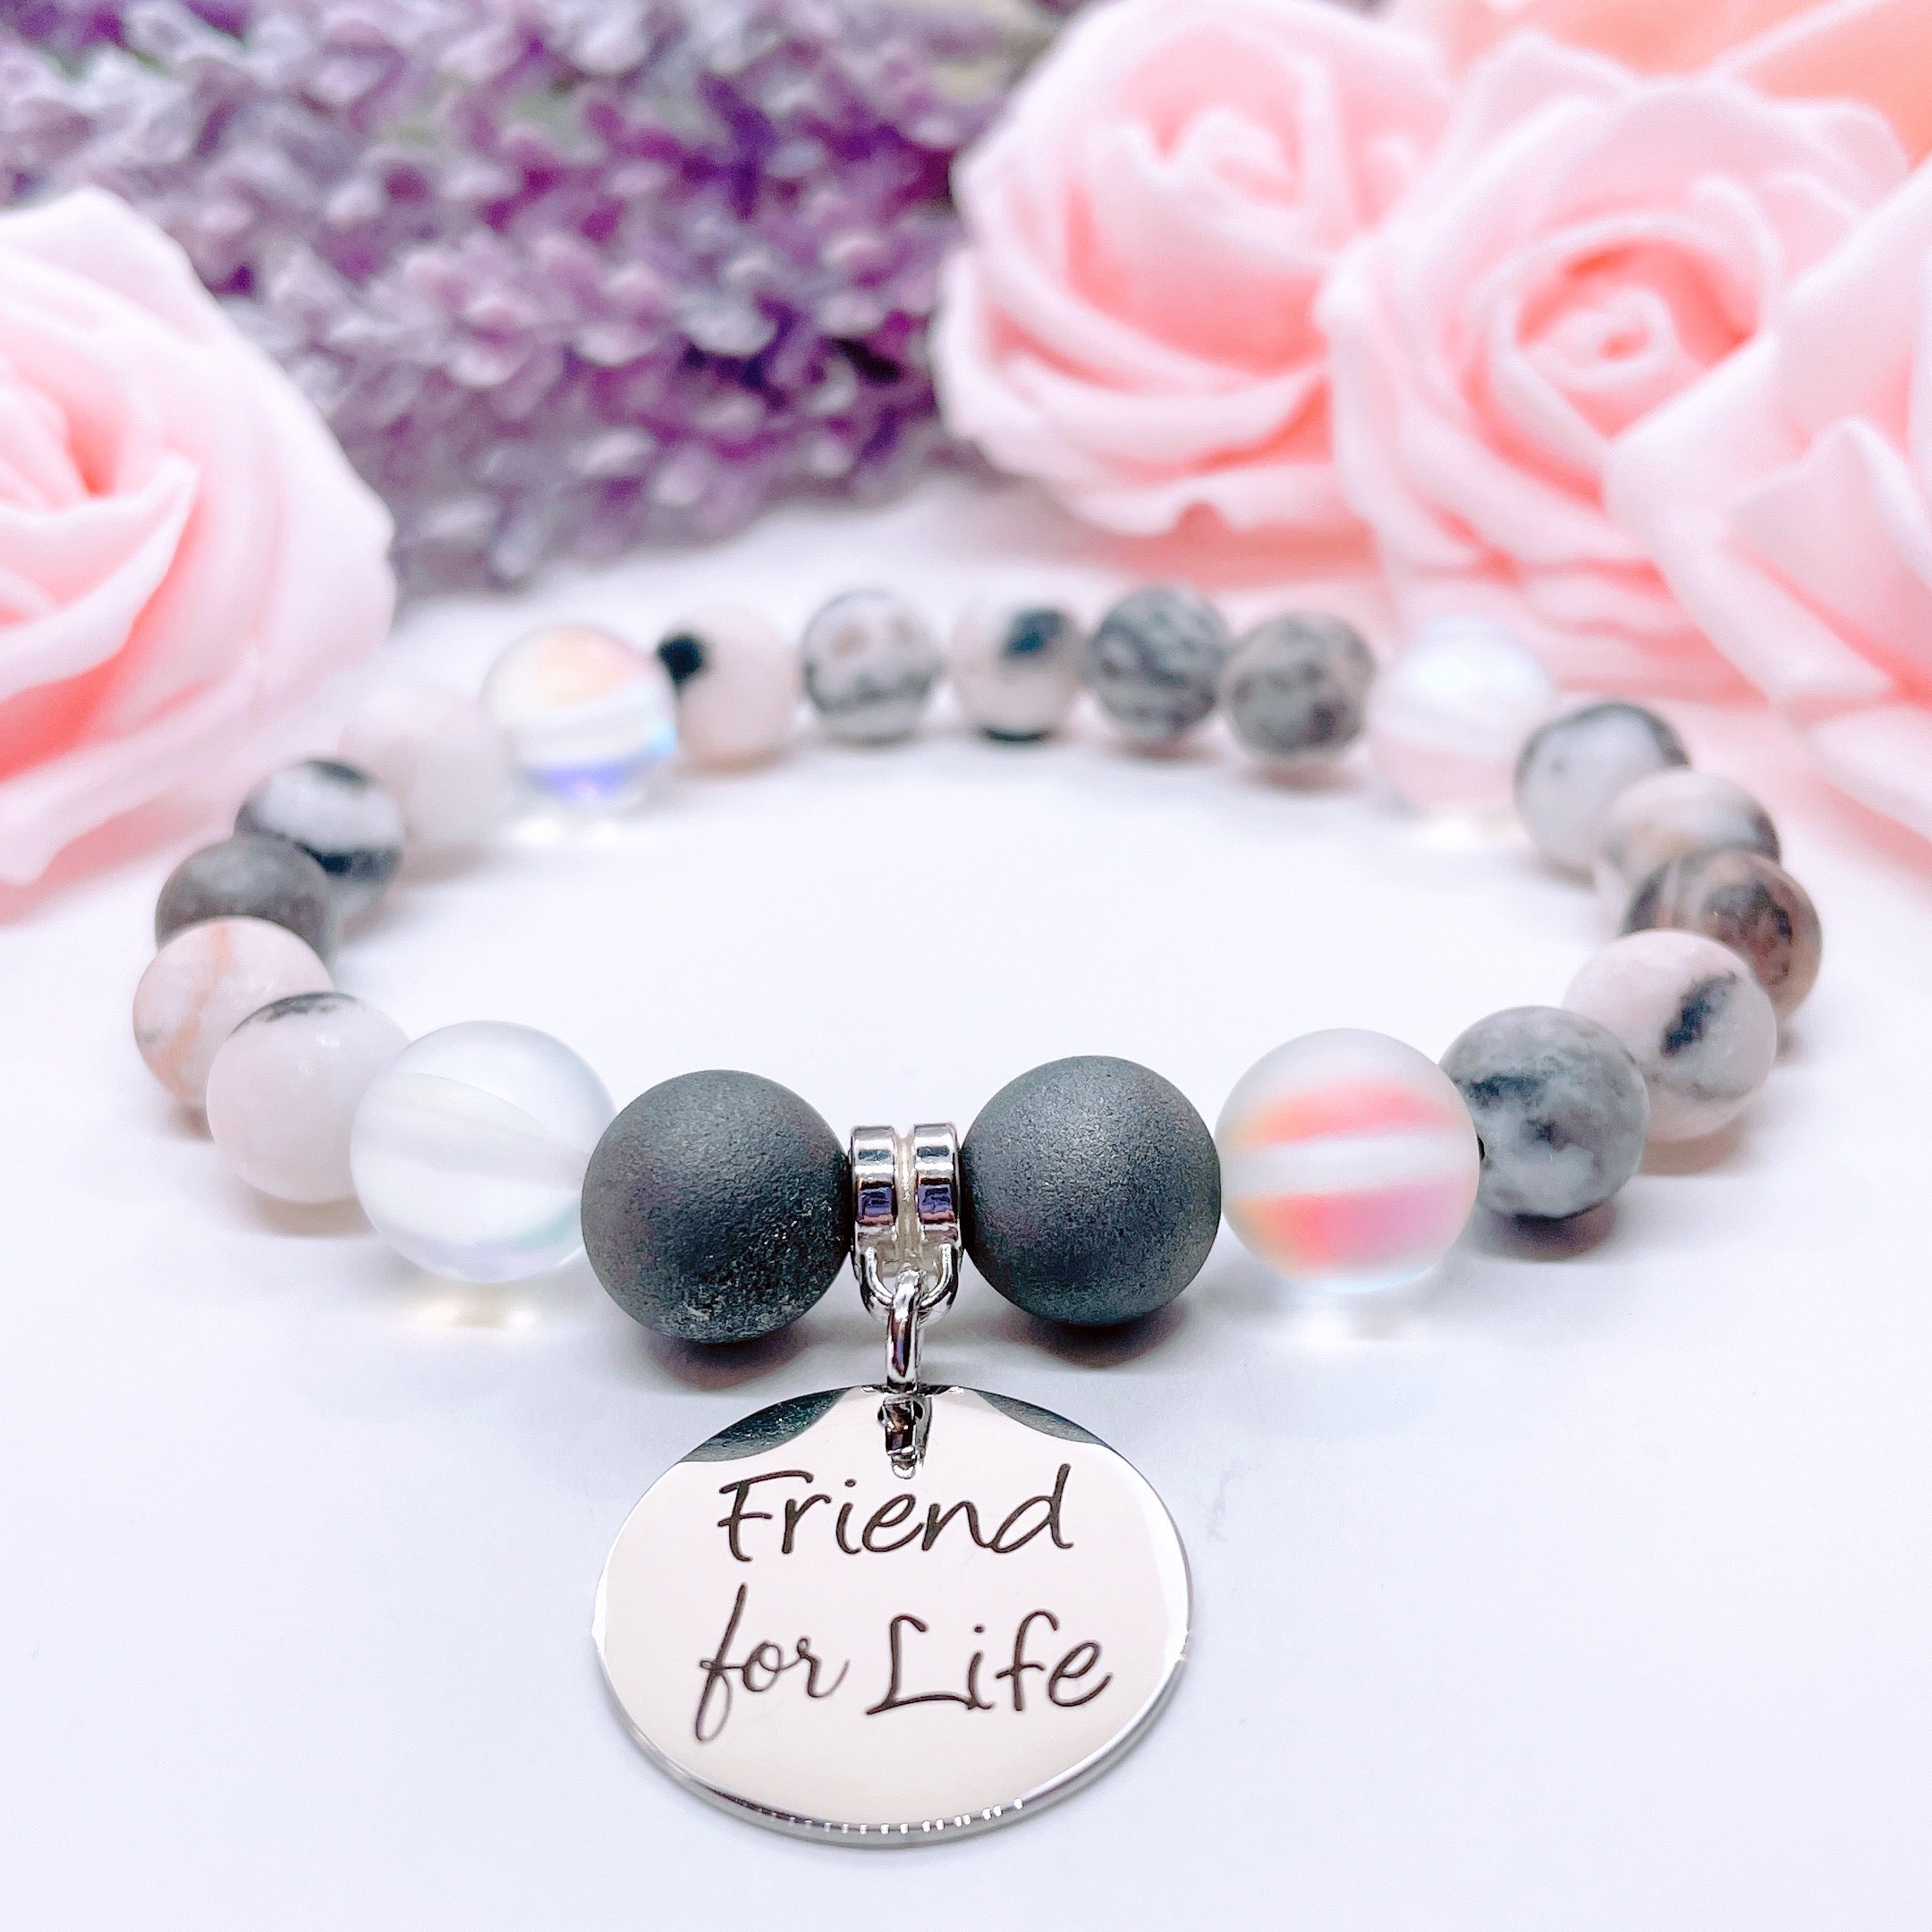 Friend for Life Charm Bracelet